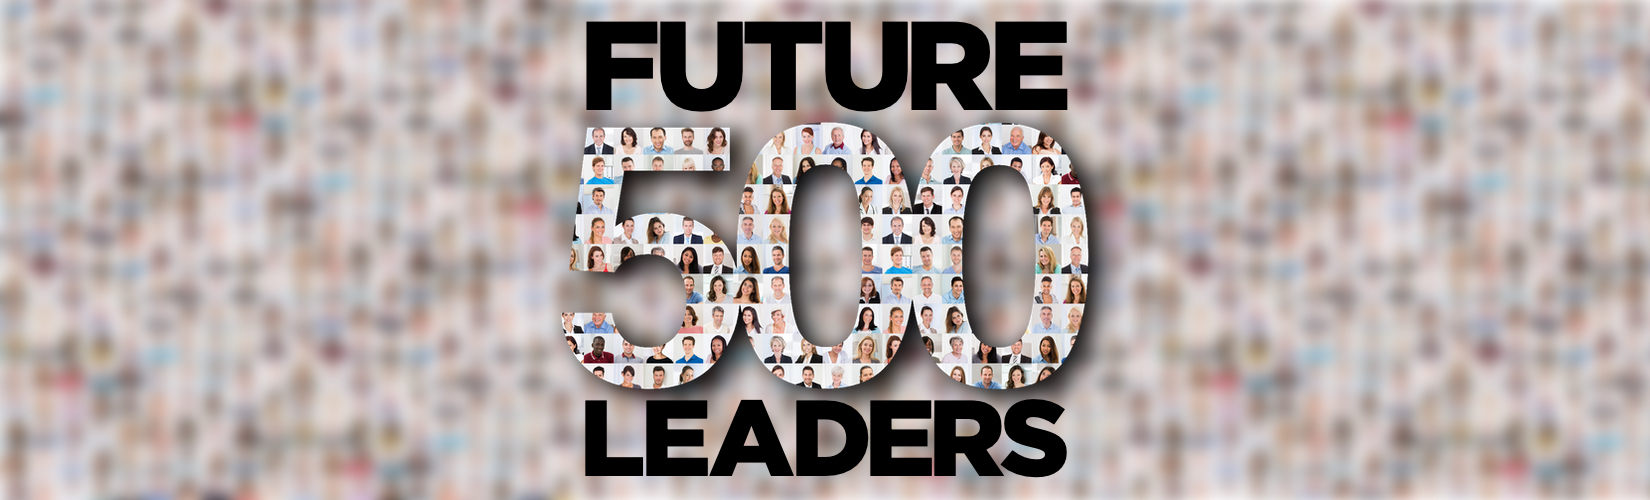 Future 500 Leaders governance scholarship